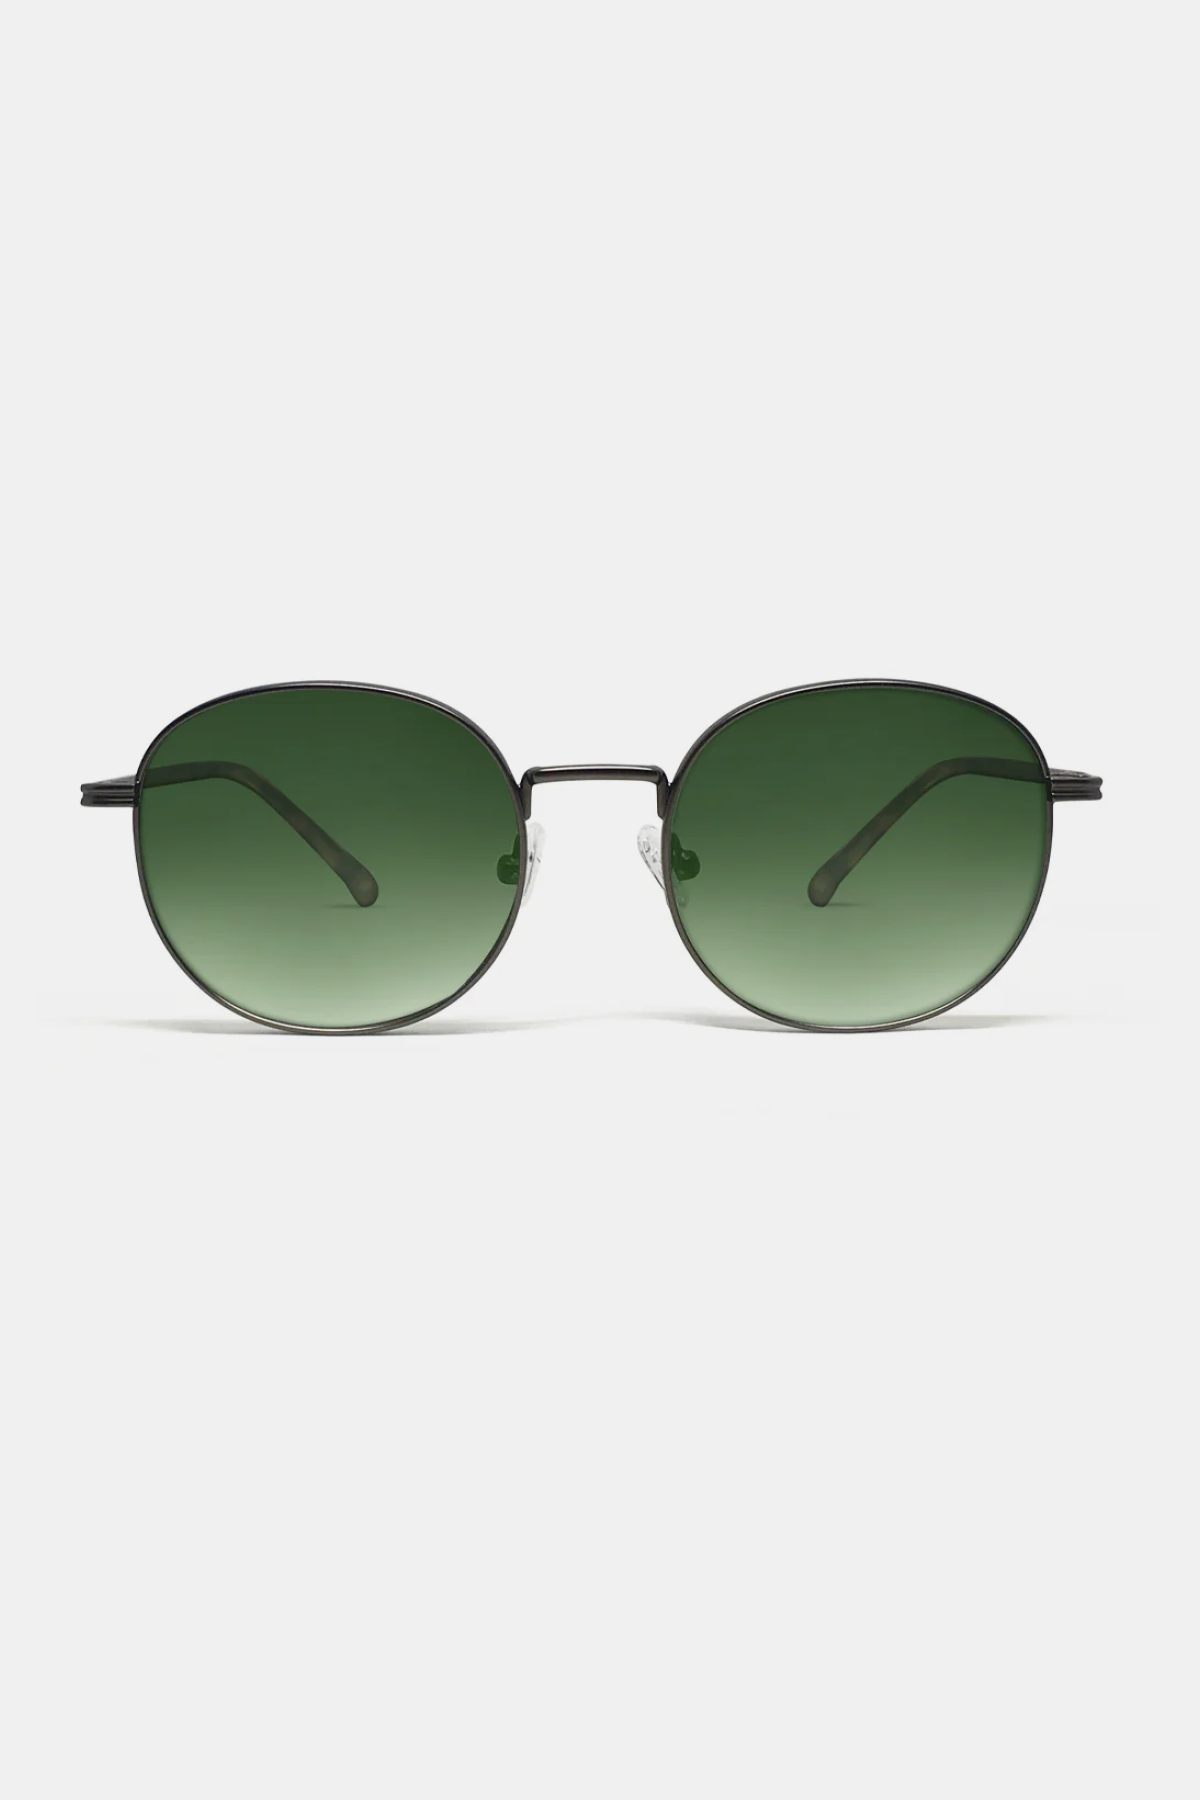 WEAREEYES Tension 2.0 Sunglasses - Gun/Green Gradient